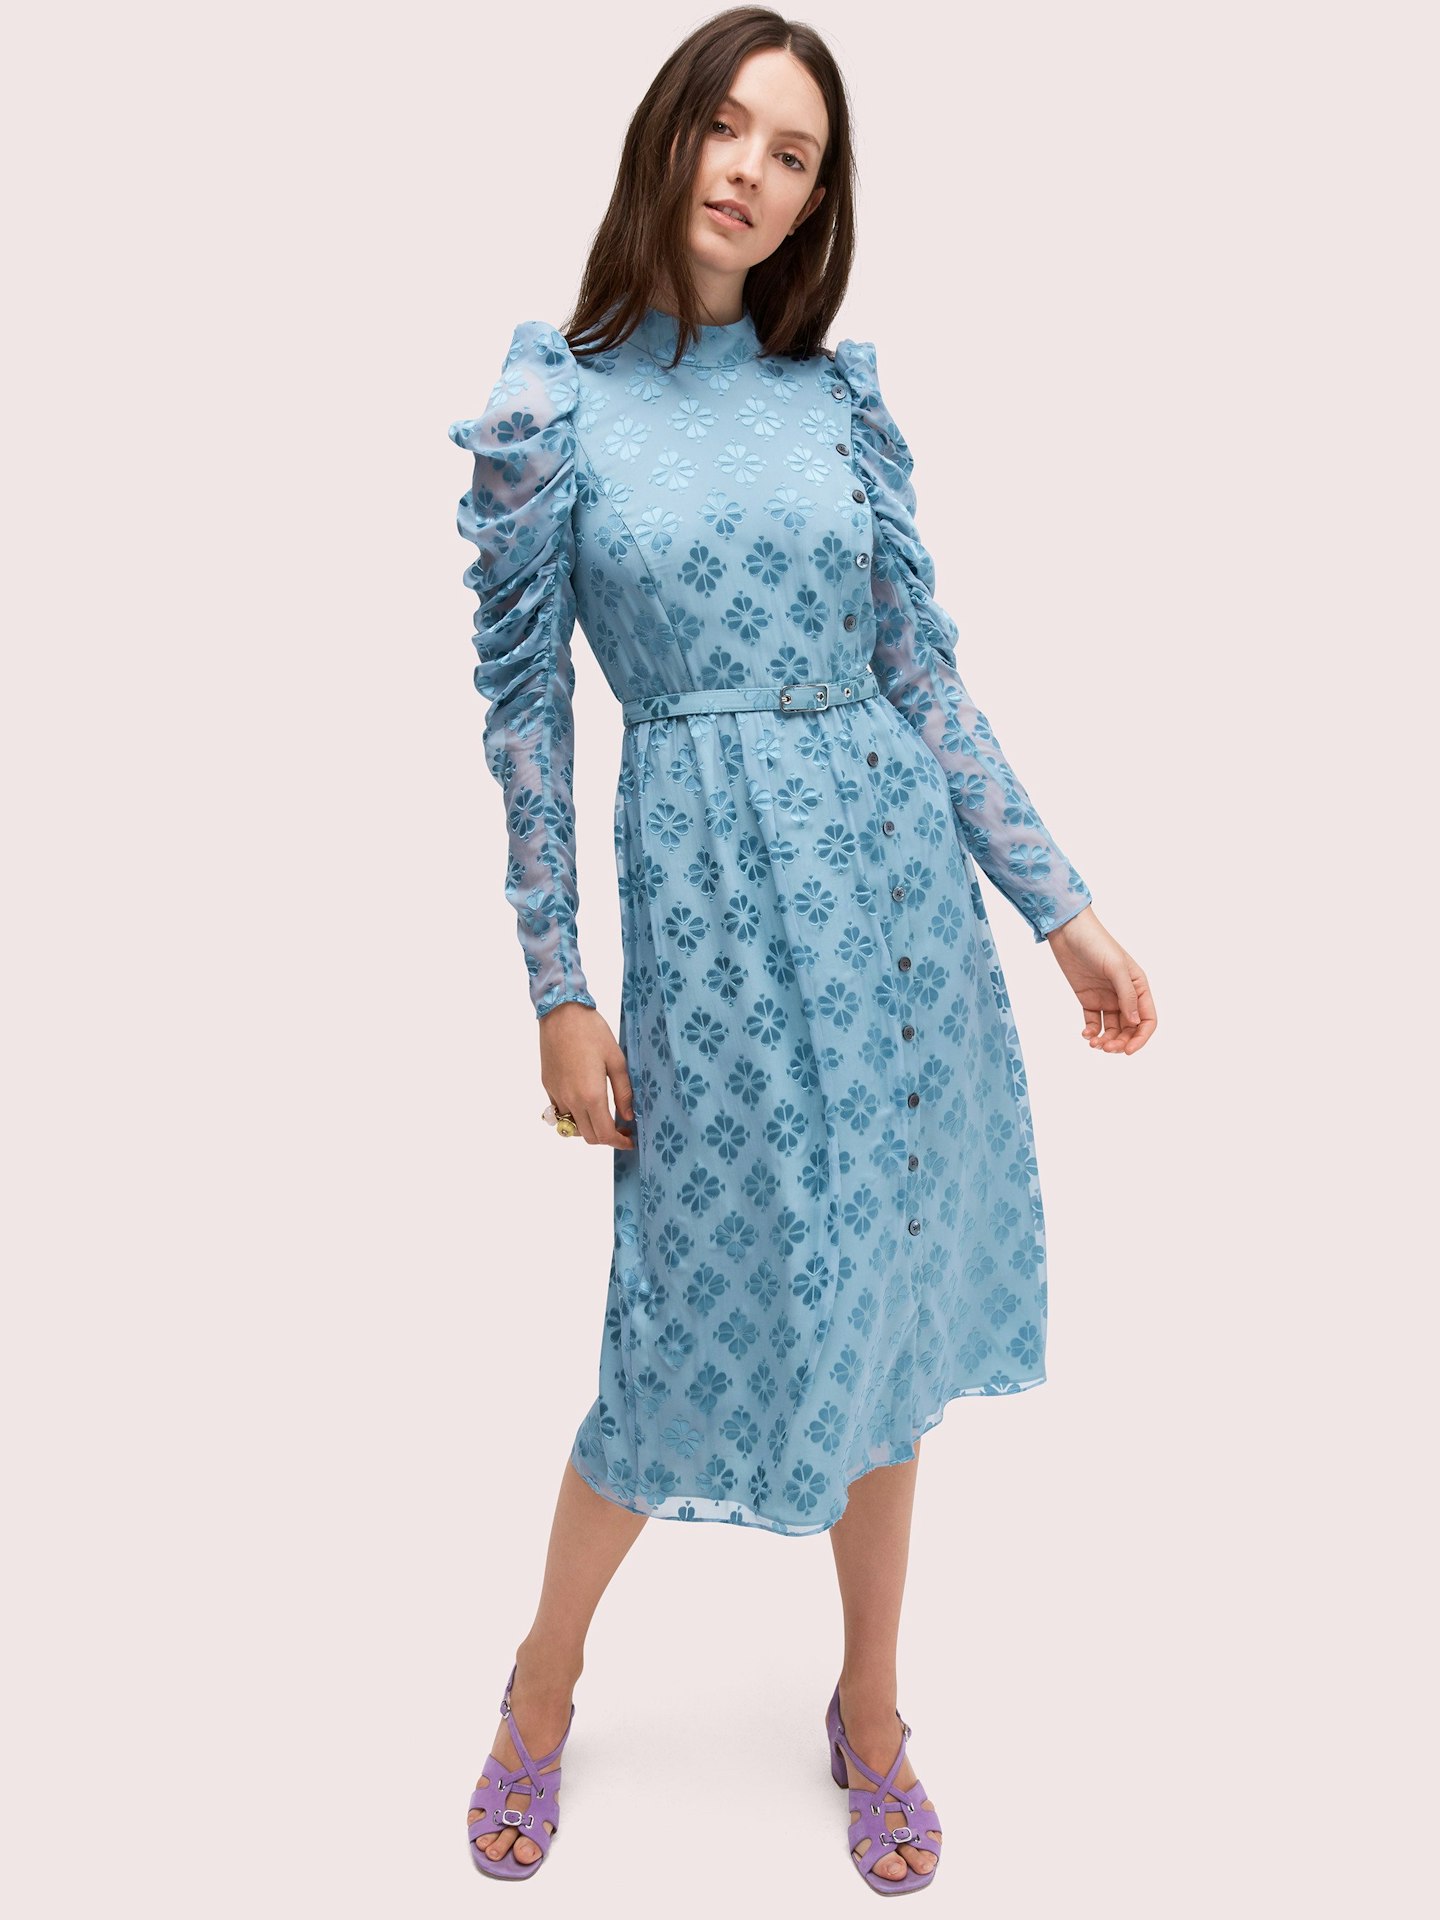 Kate Spade, Blue Devore Floral Midi Dress, £695